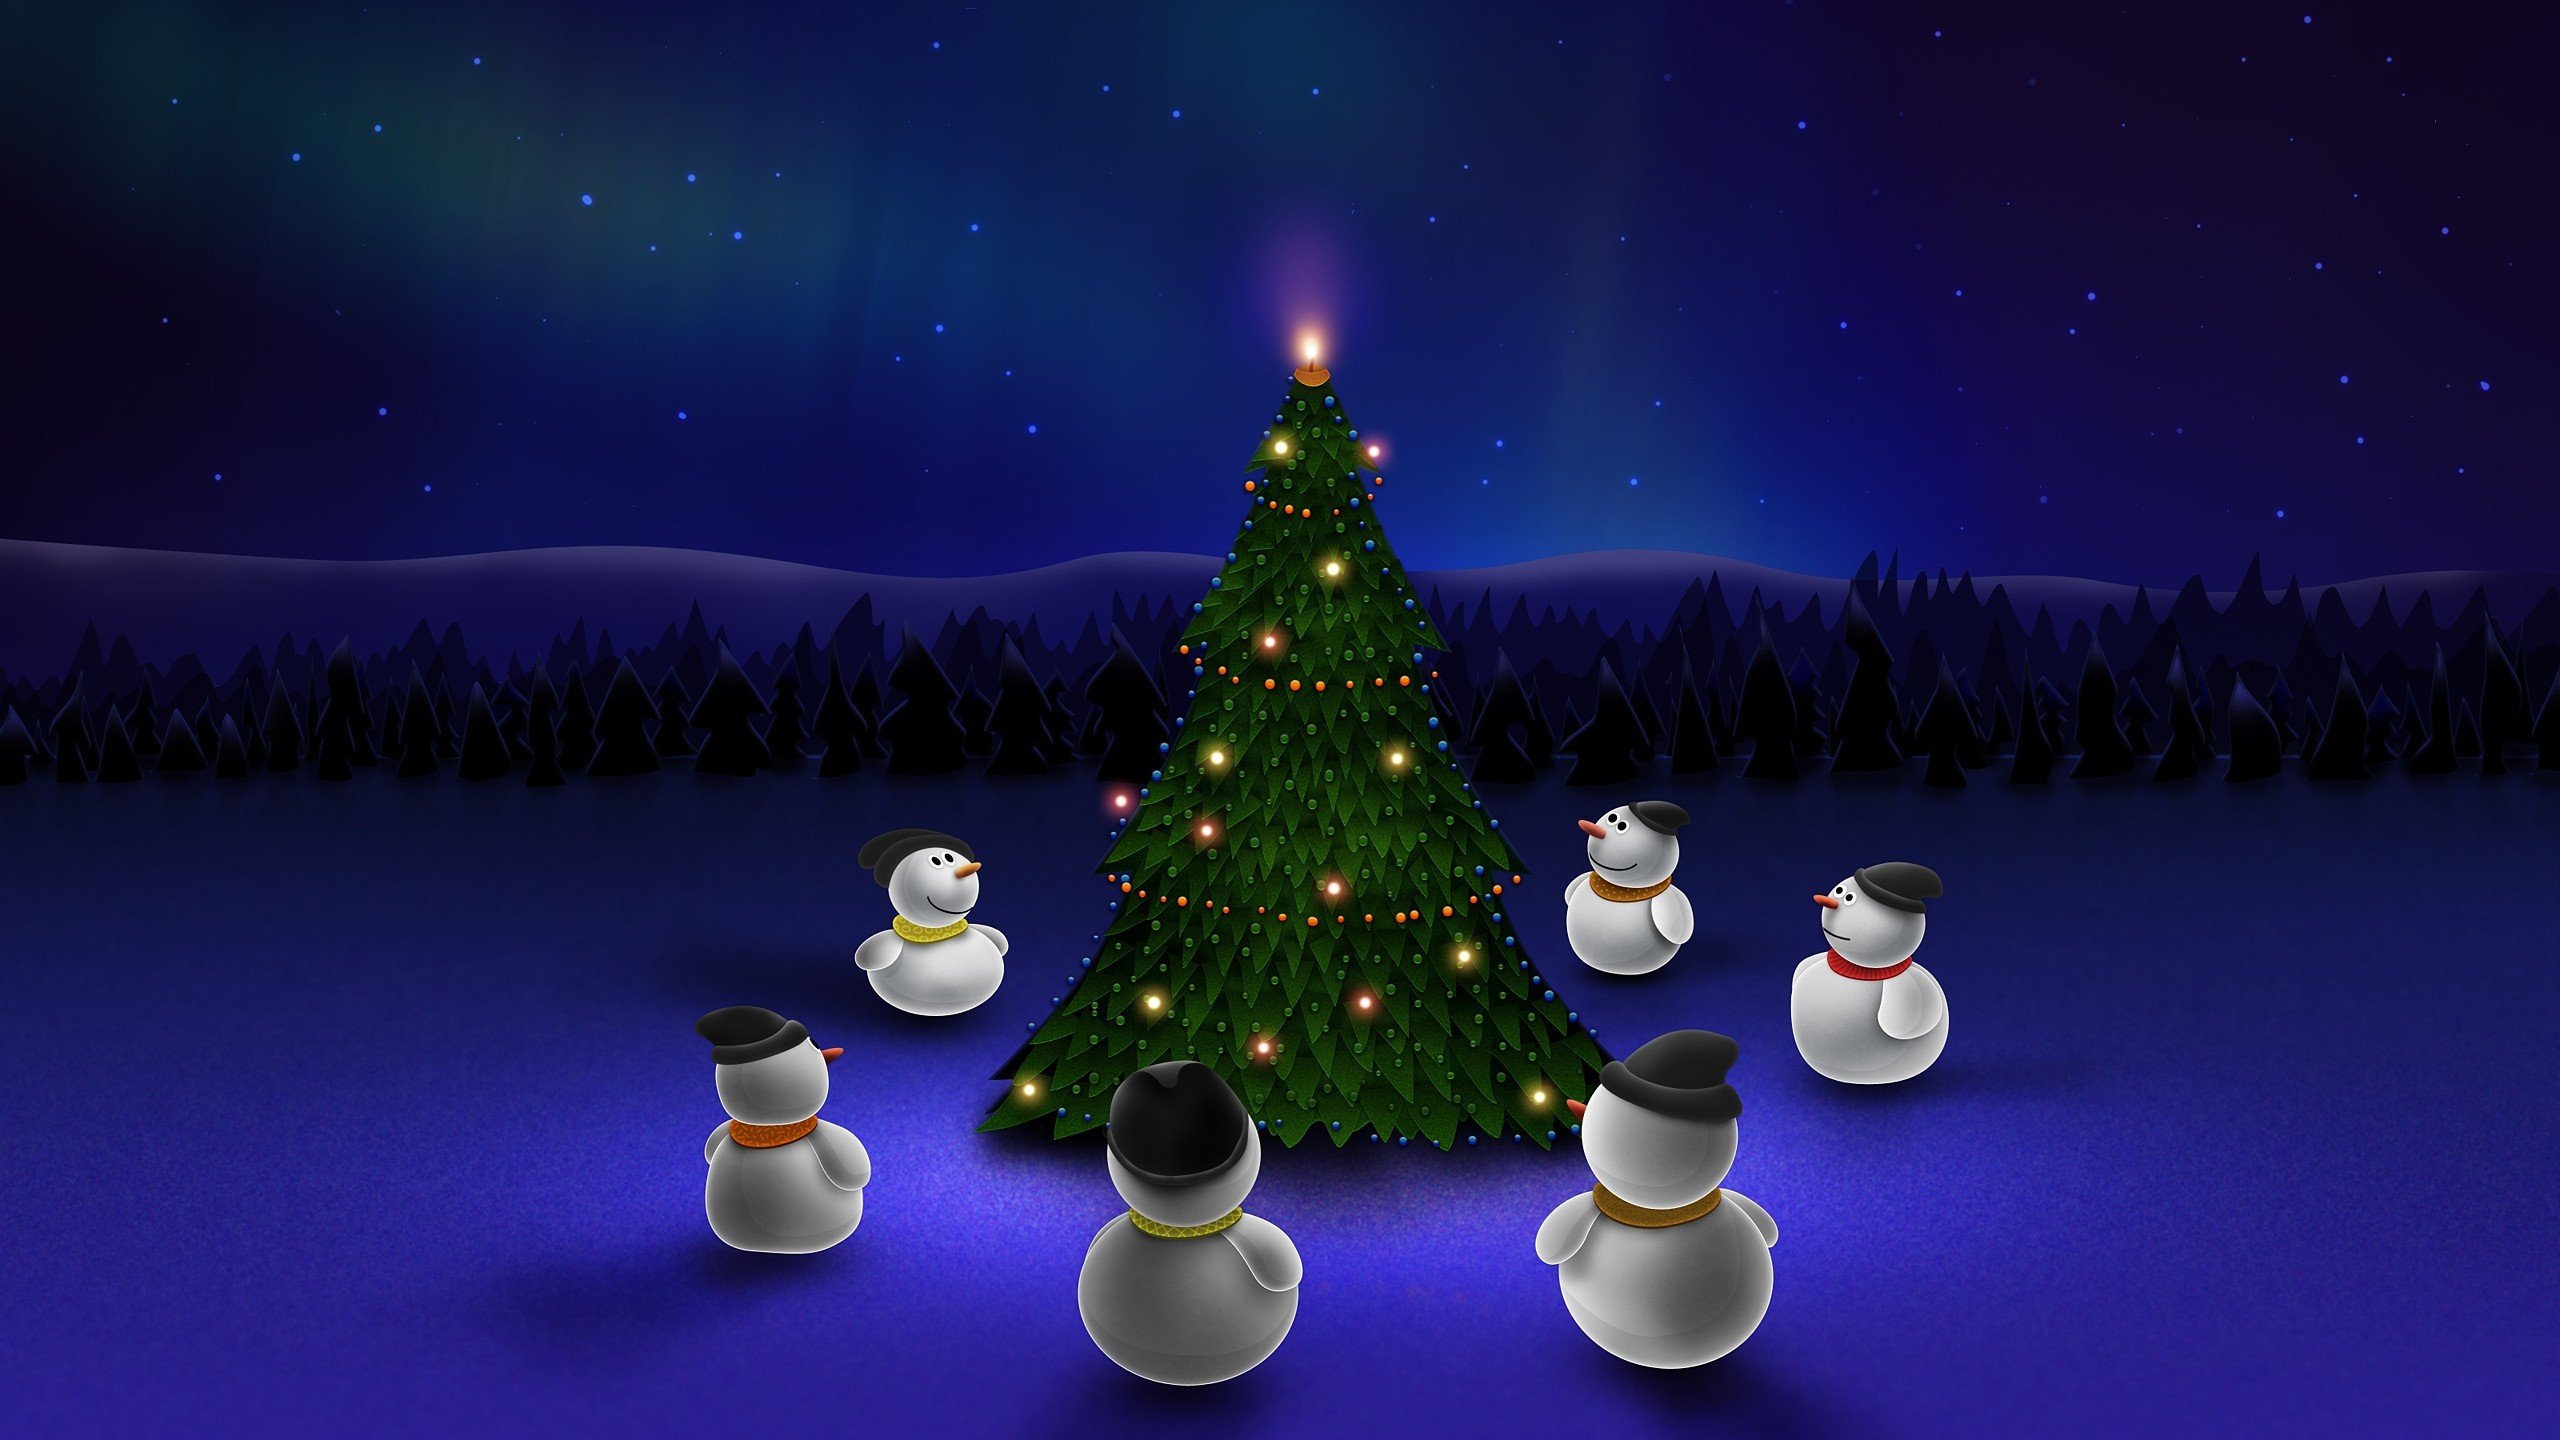 Wallpaper, 2560x1440 px, Christmas Tree, snowmen 2560x1440